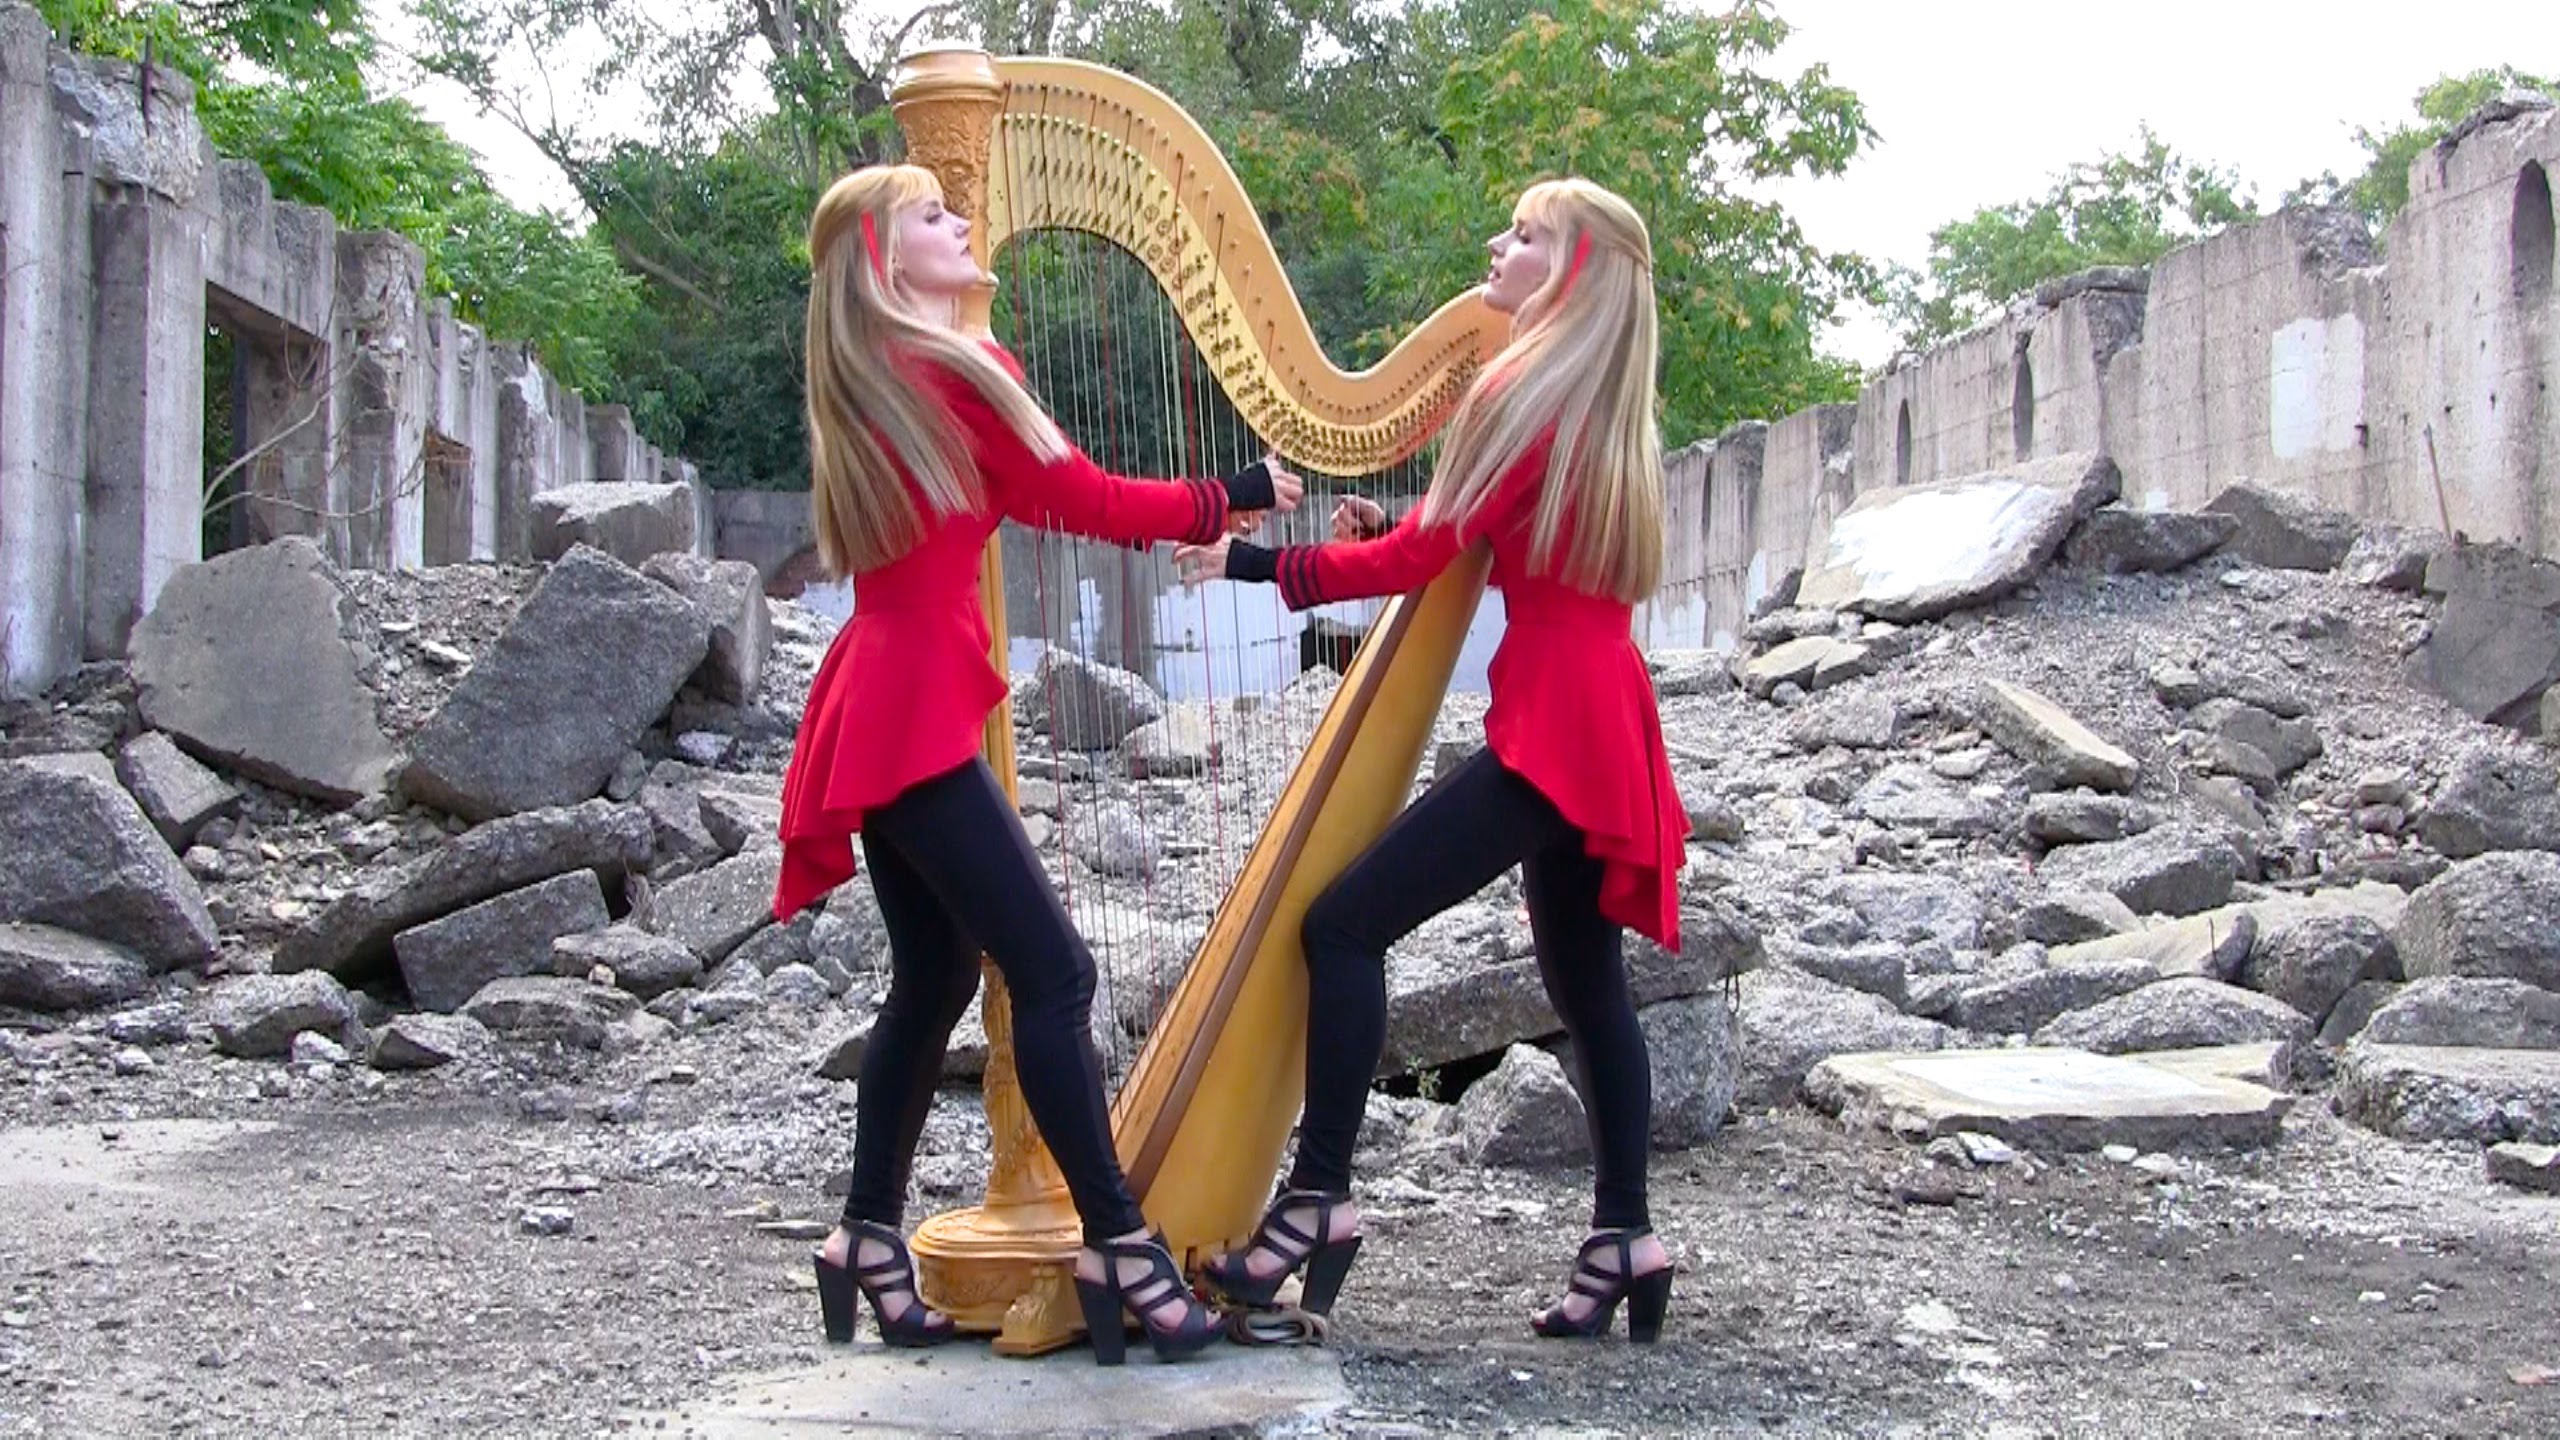 METALLICA “One” - 2 Girls 1 Harp (Harp Twins) HARP METAL - YouTube